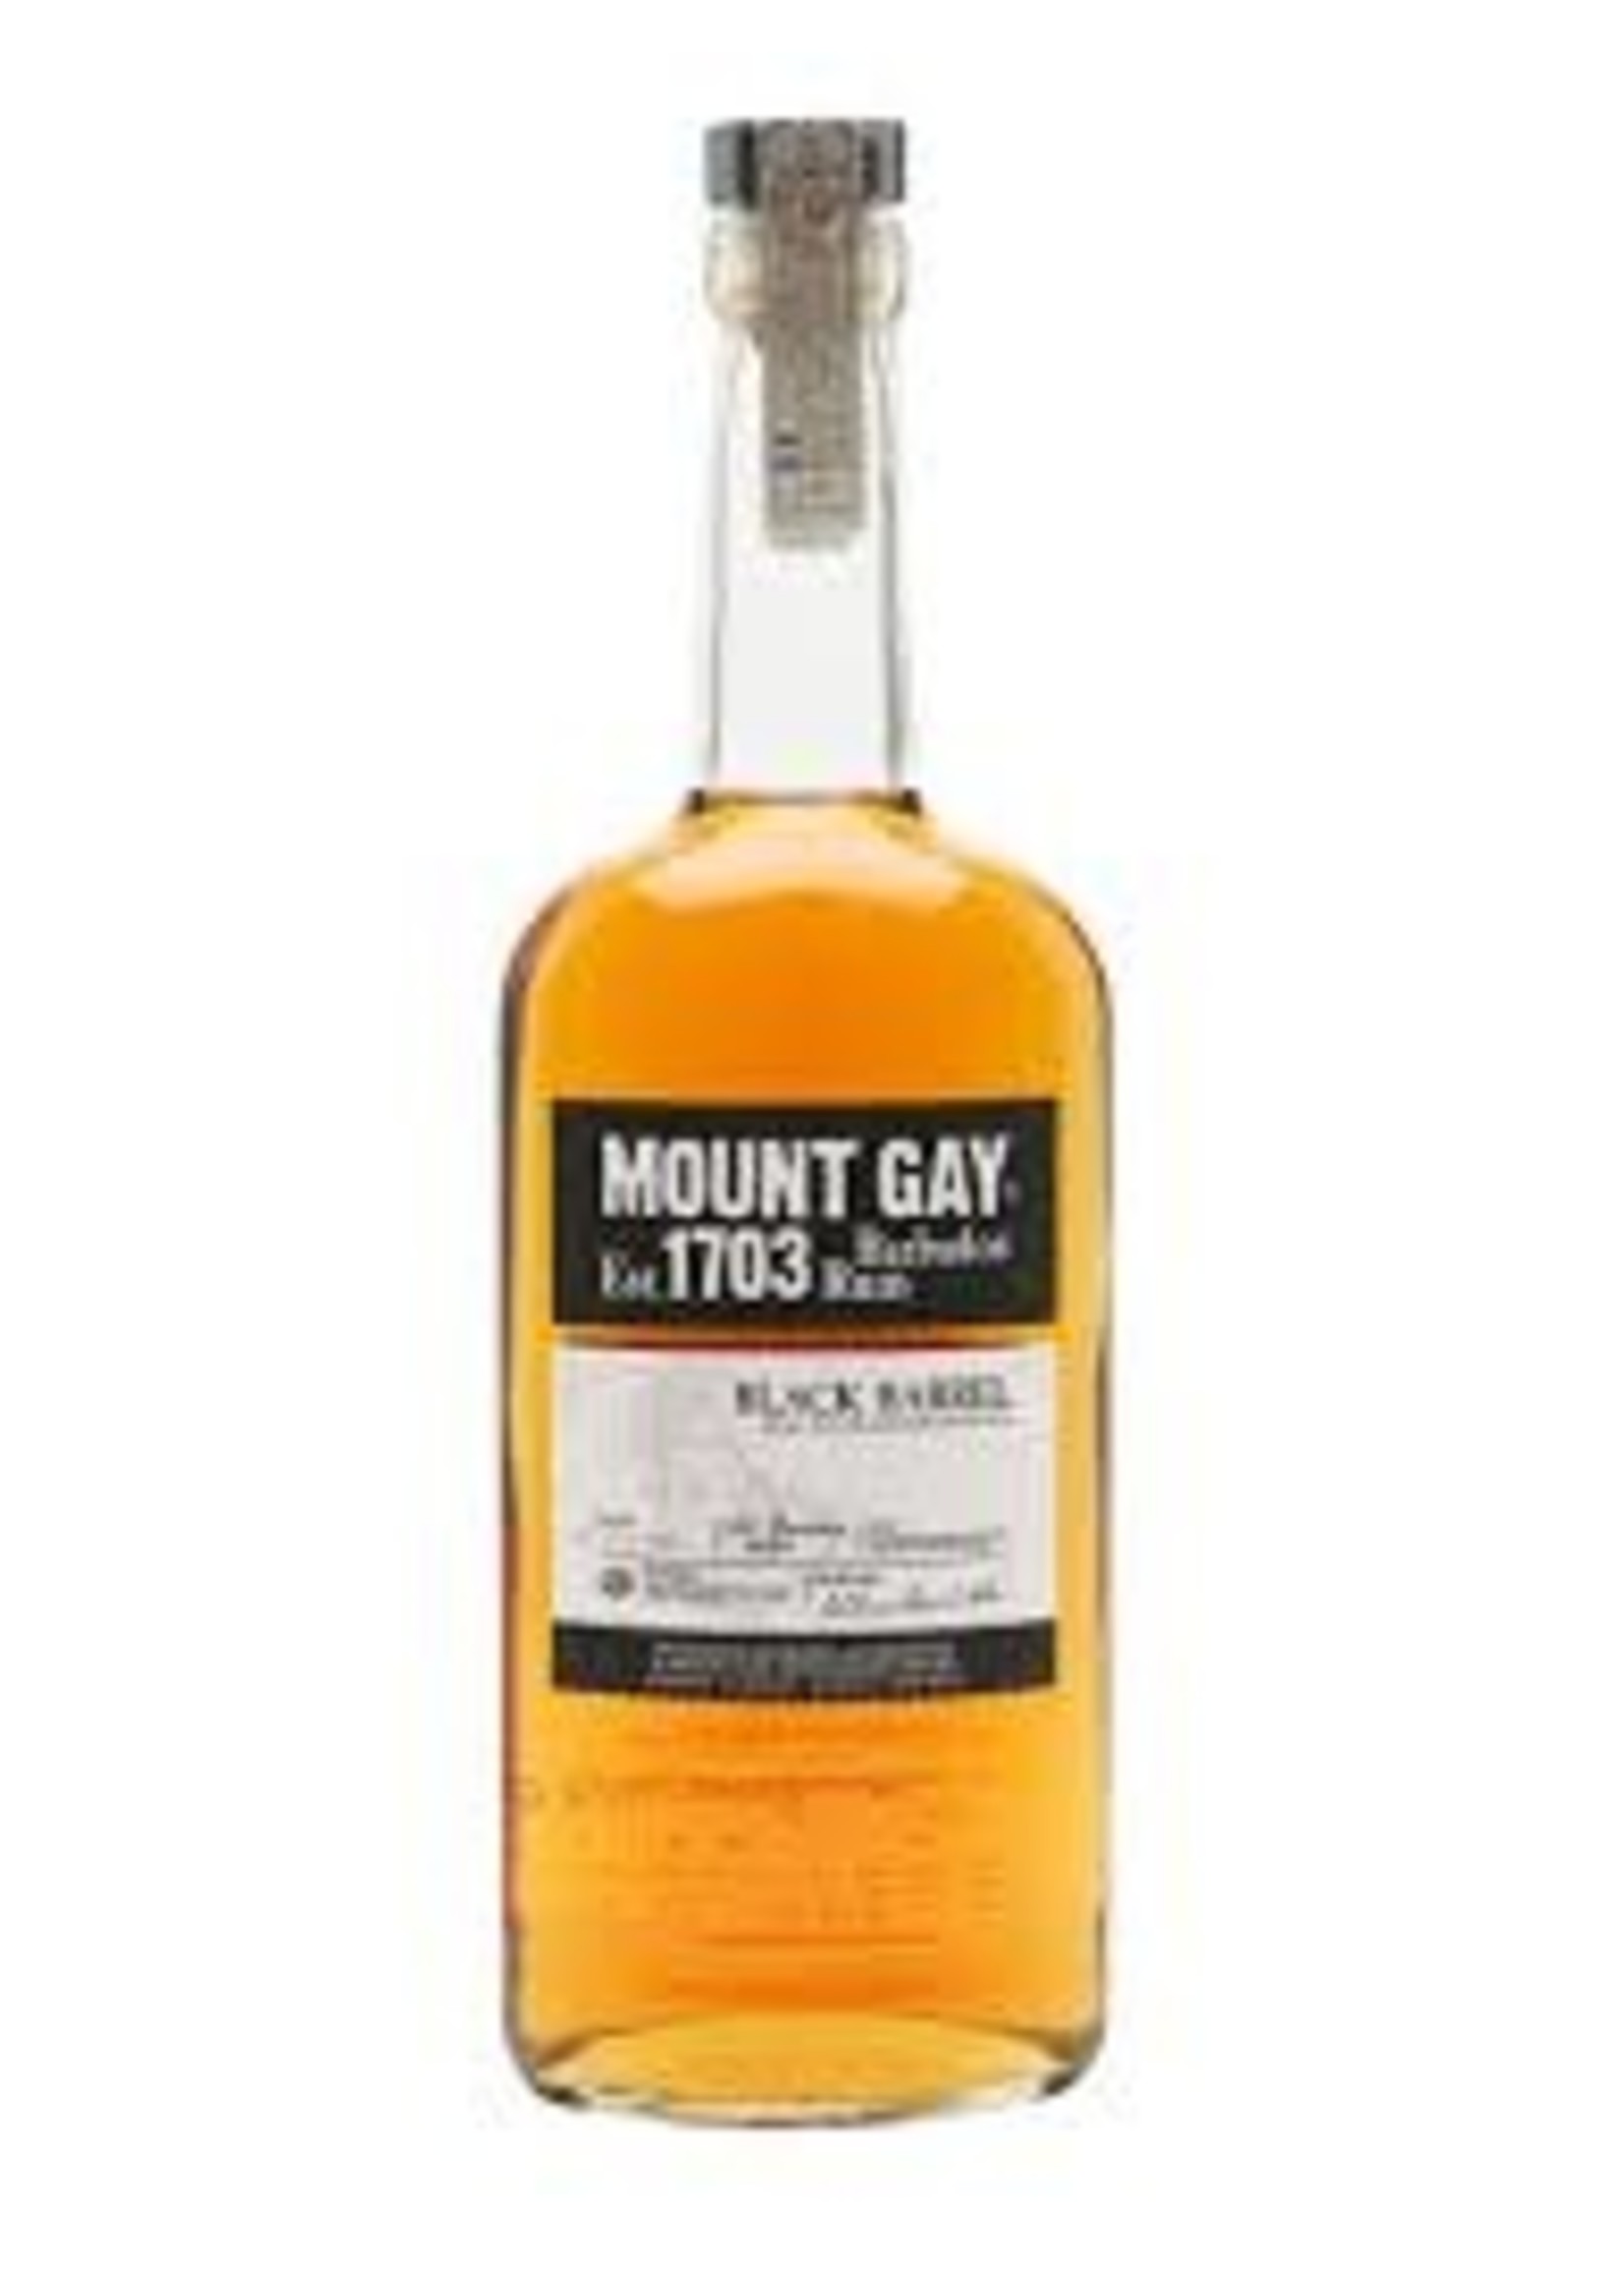 Mount Gay Mount Gay / Eclipse Rum